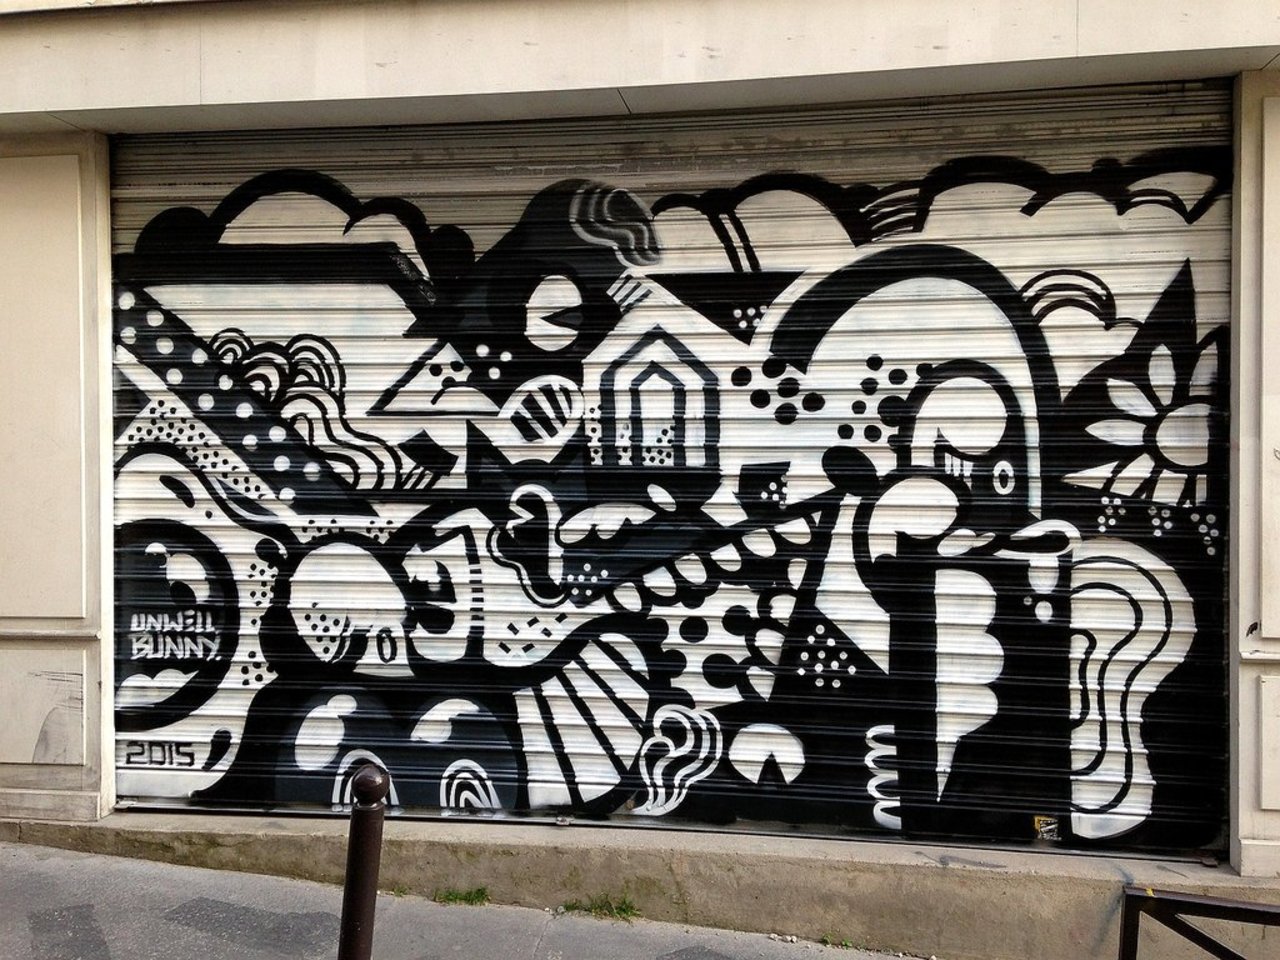 Street Art by Unwell Bunny in #Paris http://www.urbacolors.com #art #mural #graffiti #streetart https://t.co/BSlXPEEefK